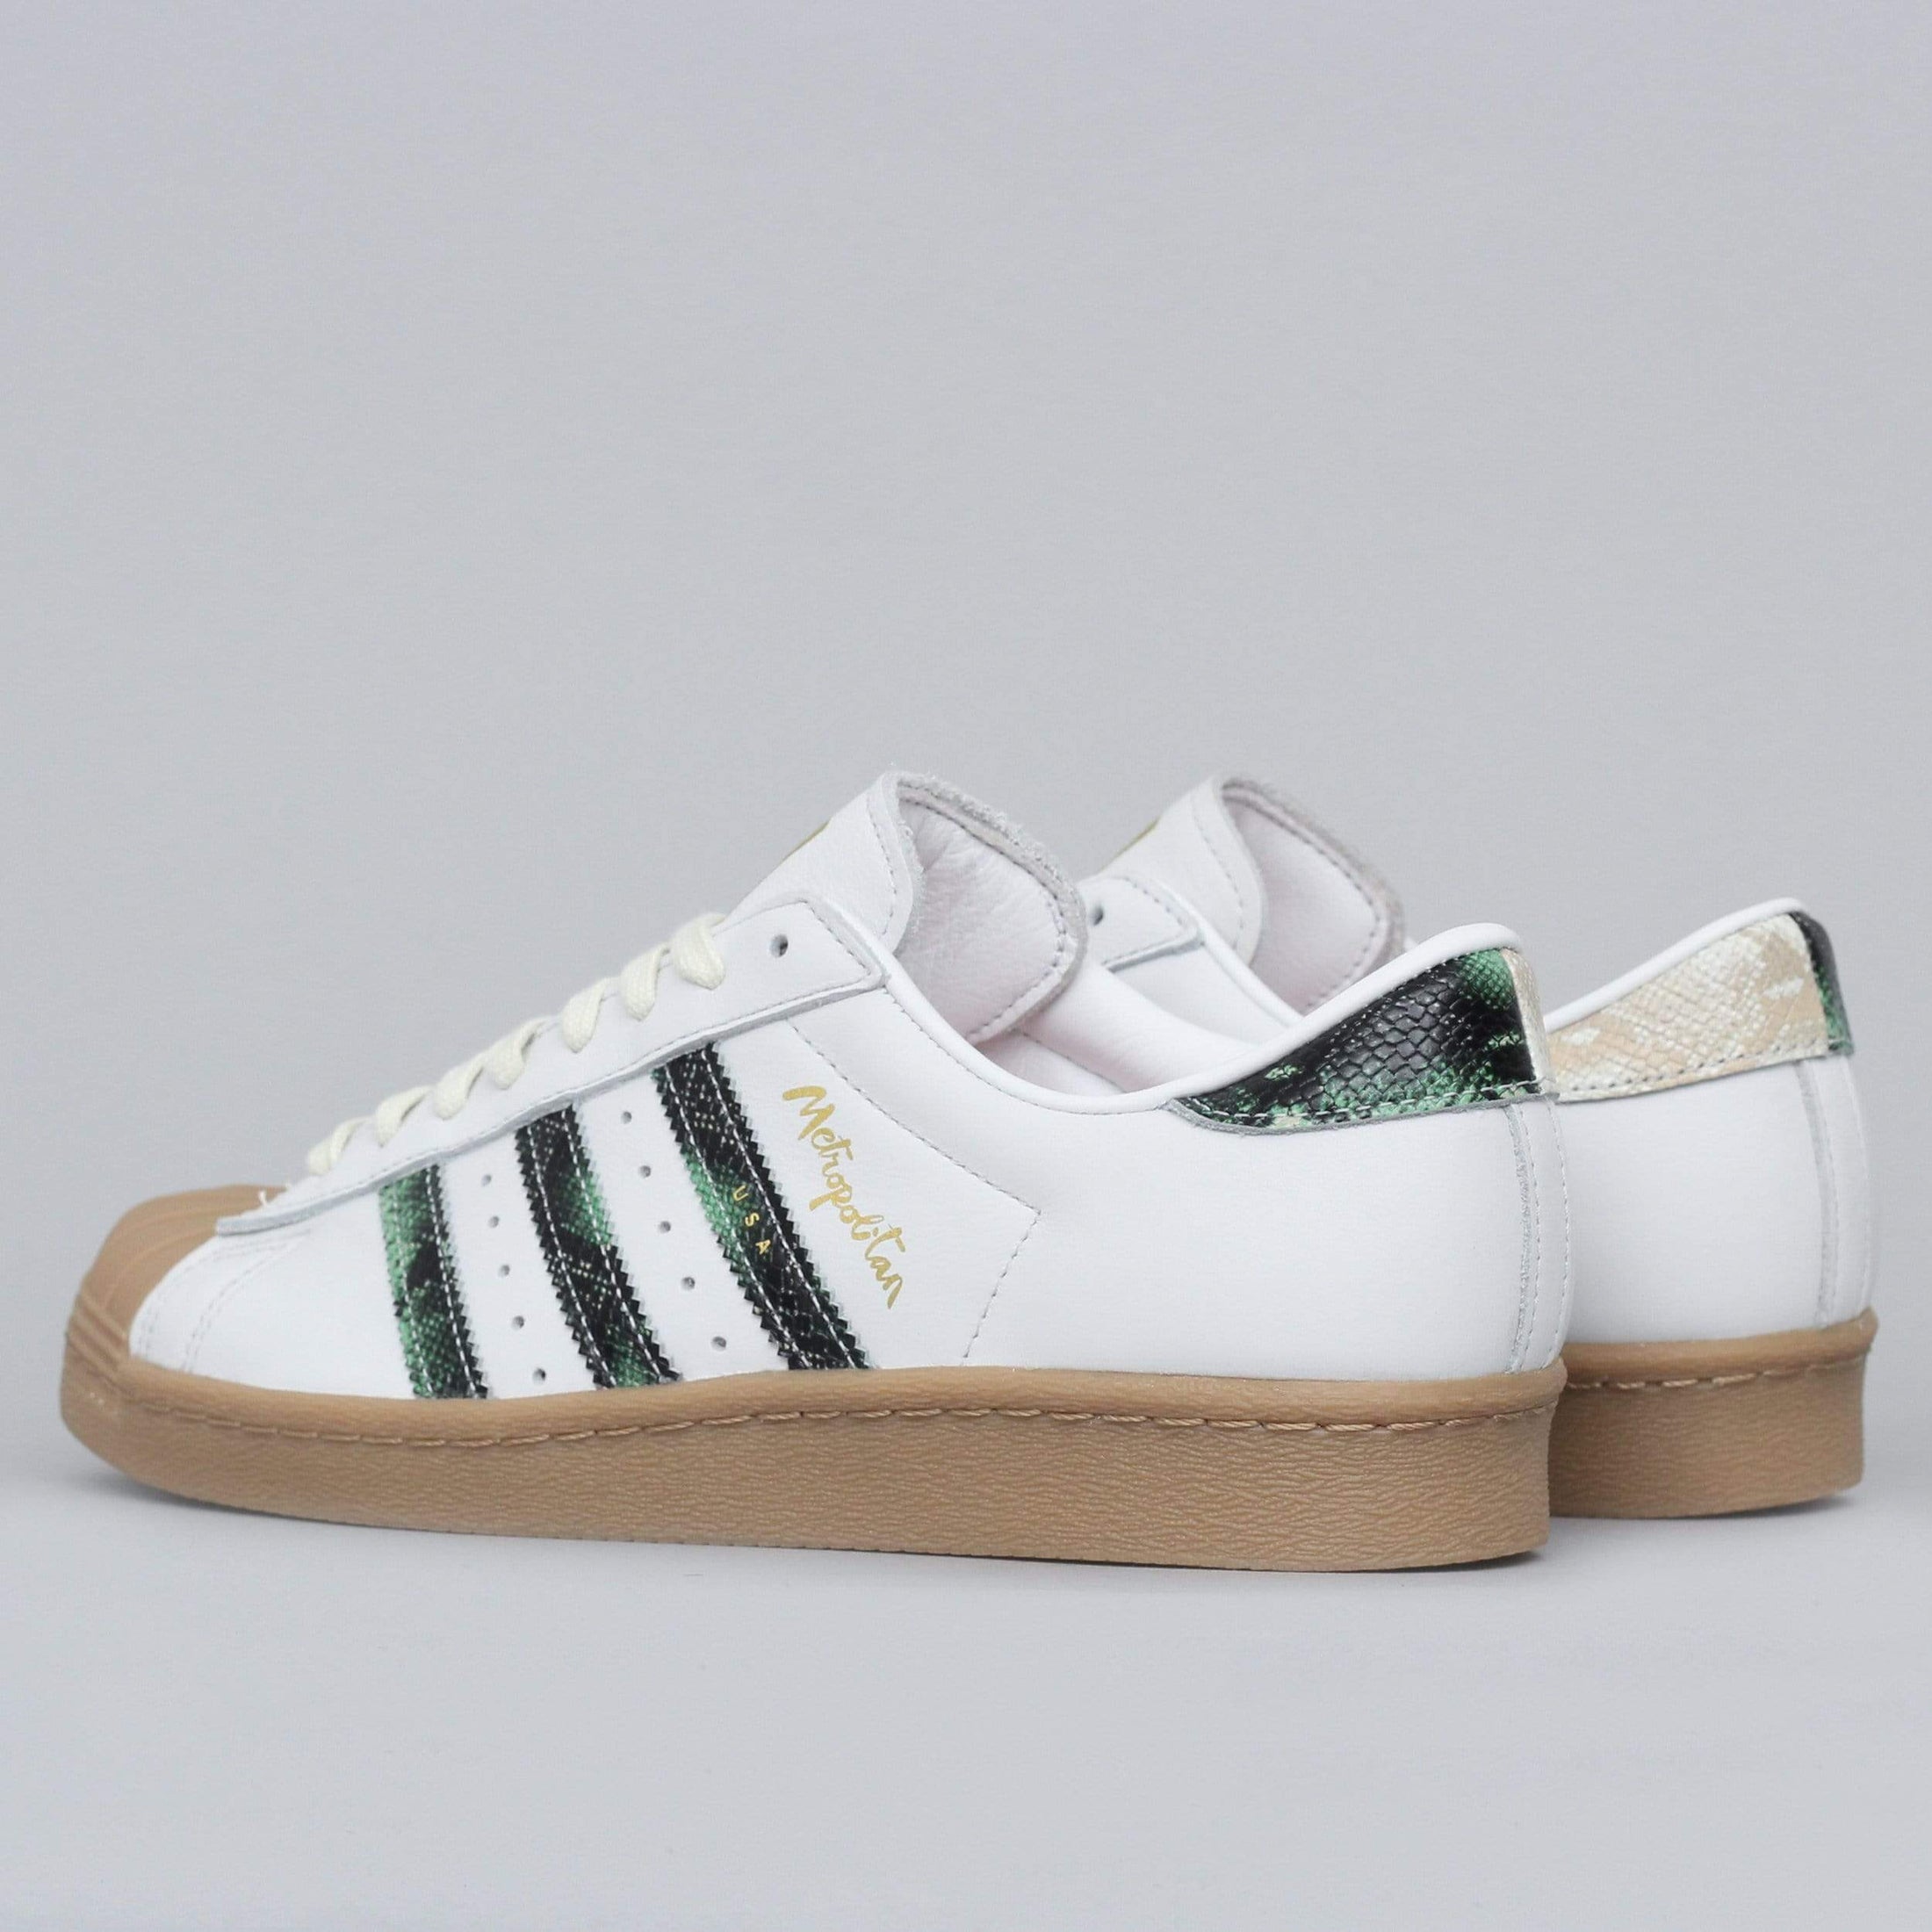 adidas Superstar 80s x Metropolitan Shoes Crystal White / Collegiate Green / Gum